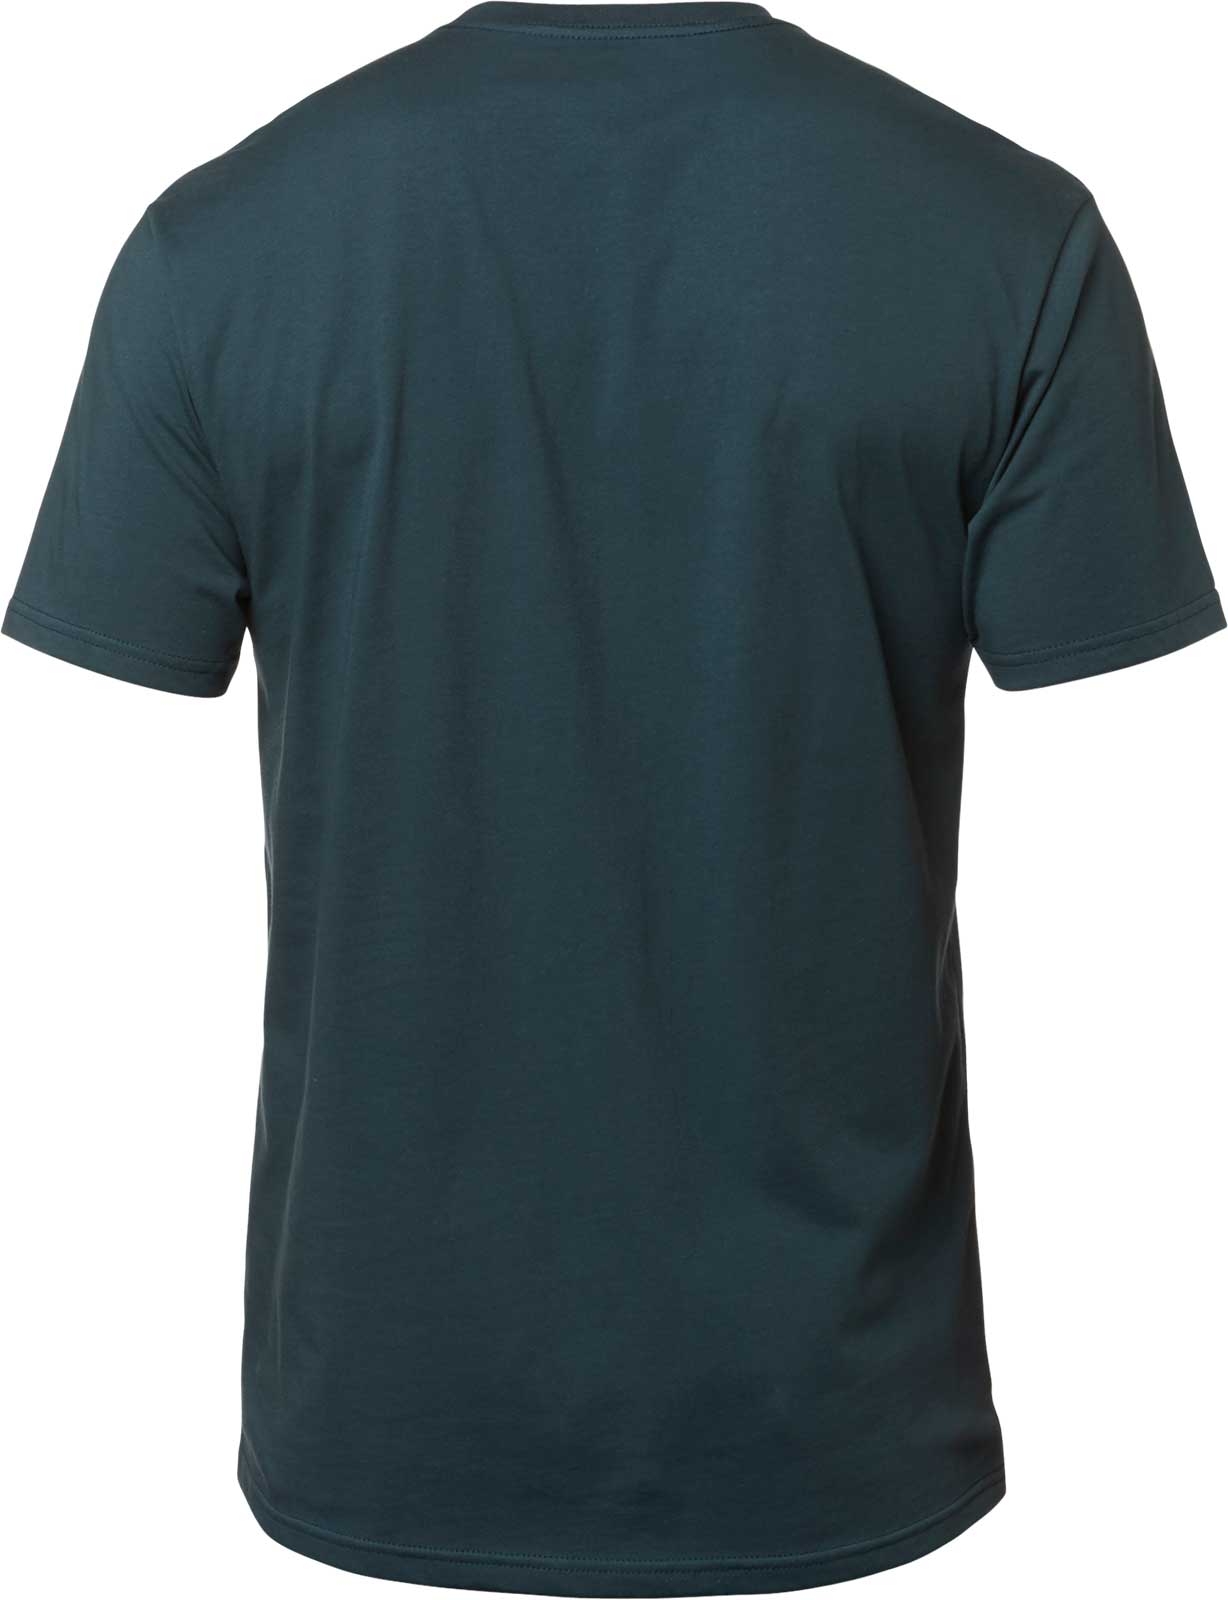 Fox Racing Youth Furnace Basic Tee Shirt Short Sleeve Crewneck Soft Comfy Cotton 